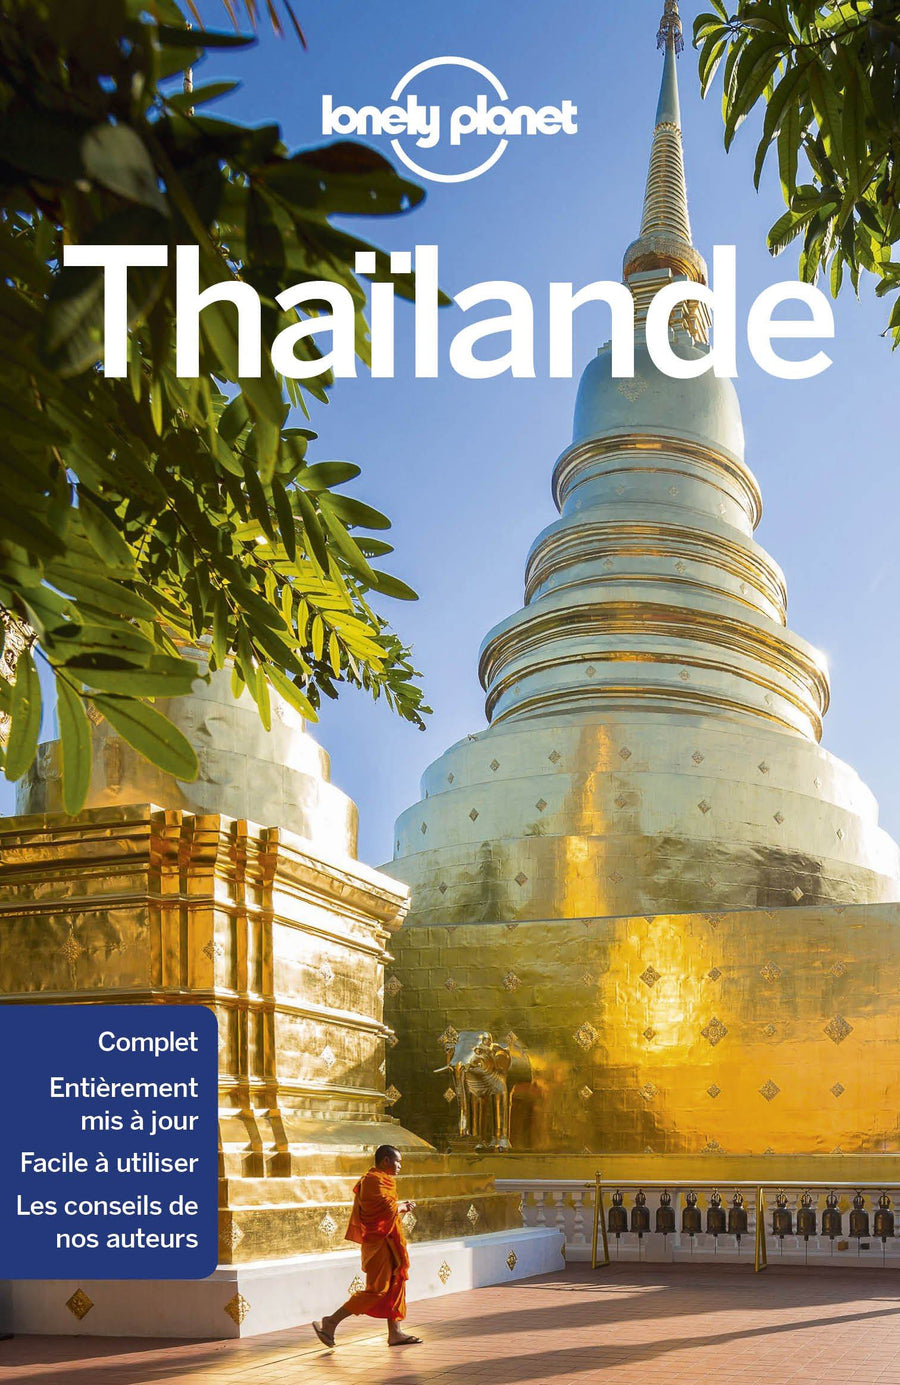 Guide de voyage - Thaïlande - Édition 2021 | Lonely Planet guide de voyage Lonely Planet 